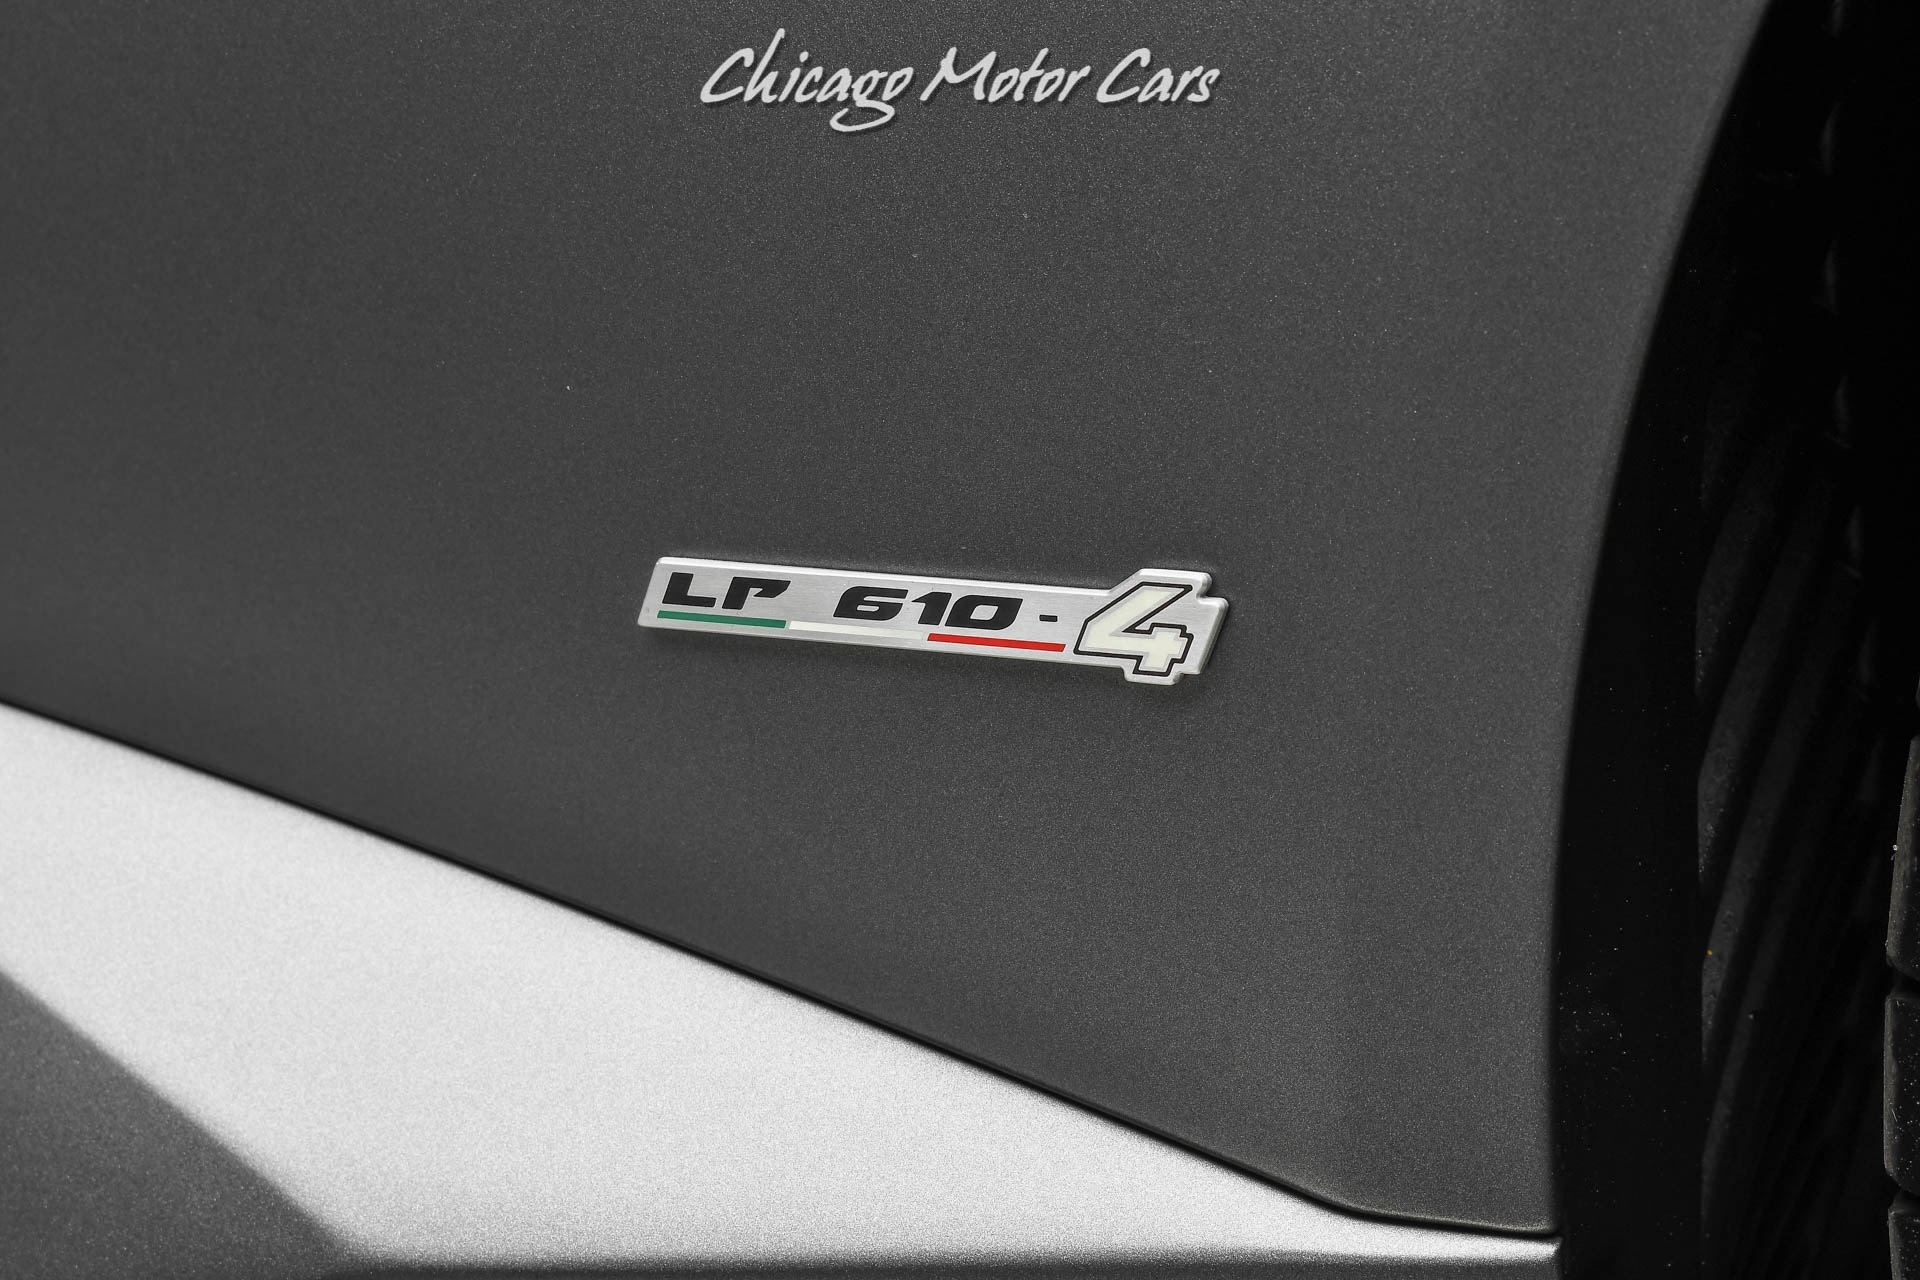 Used-2015-Lamborghini-Huracan-LP-610-4-Akrapovic-Exhaust-Serviced-Factory-Matte-Grey